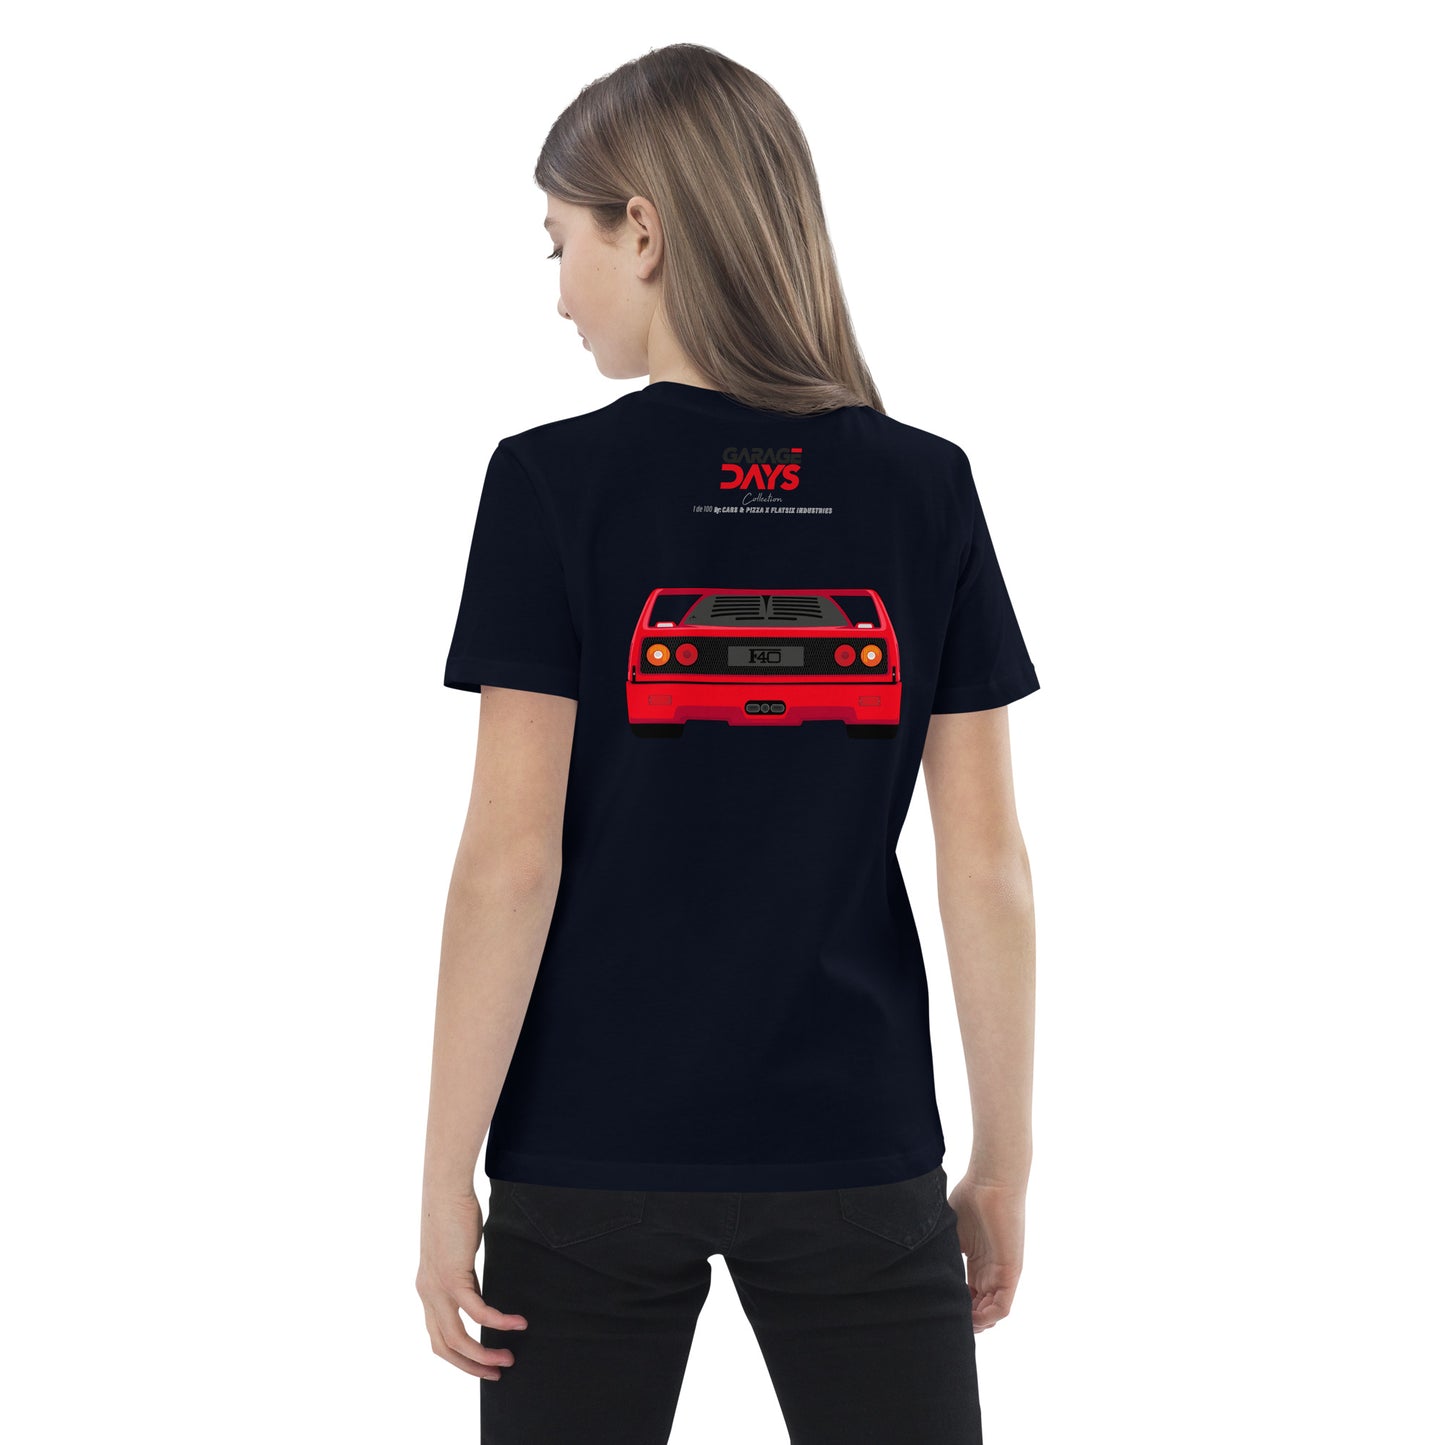 Ferrari F40 "Garage Days" 1 of 100 unisex kids t-shirt